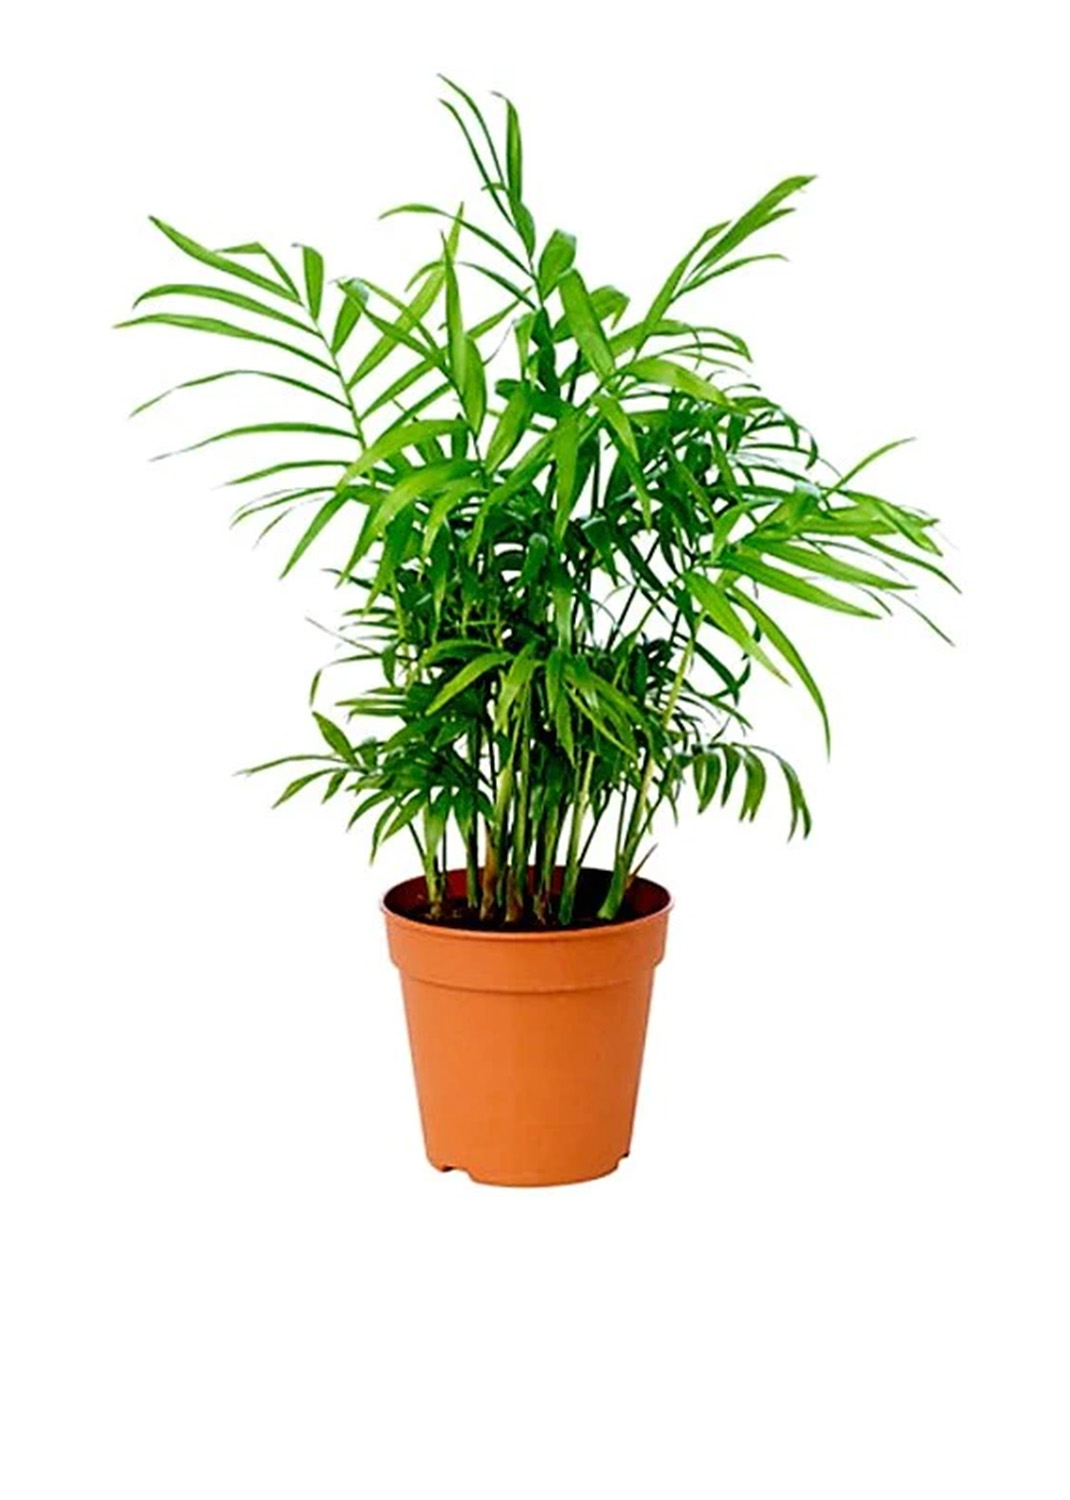 Parlour Palm, Bamboo Palm, Chamaedorea elegans {50cm/70cm}